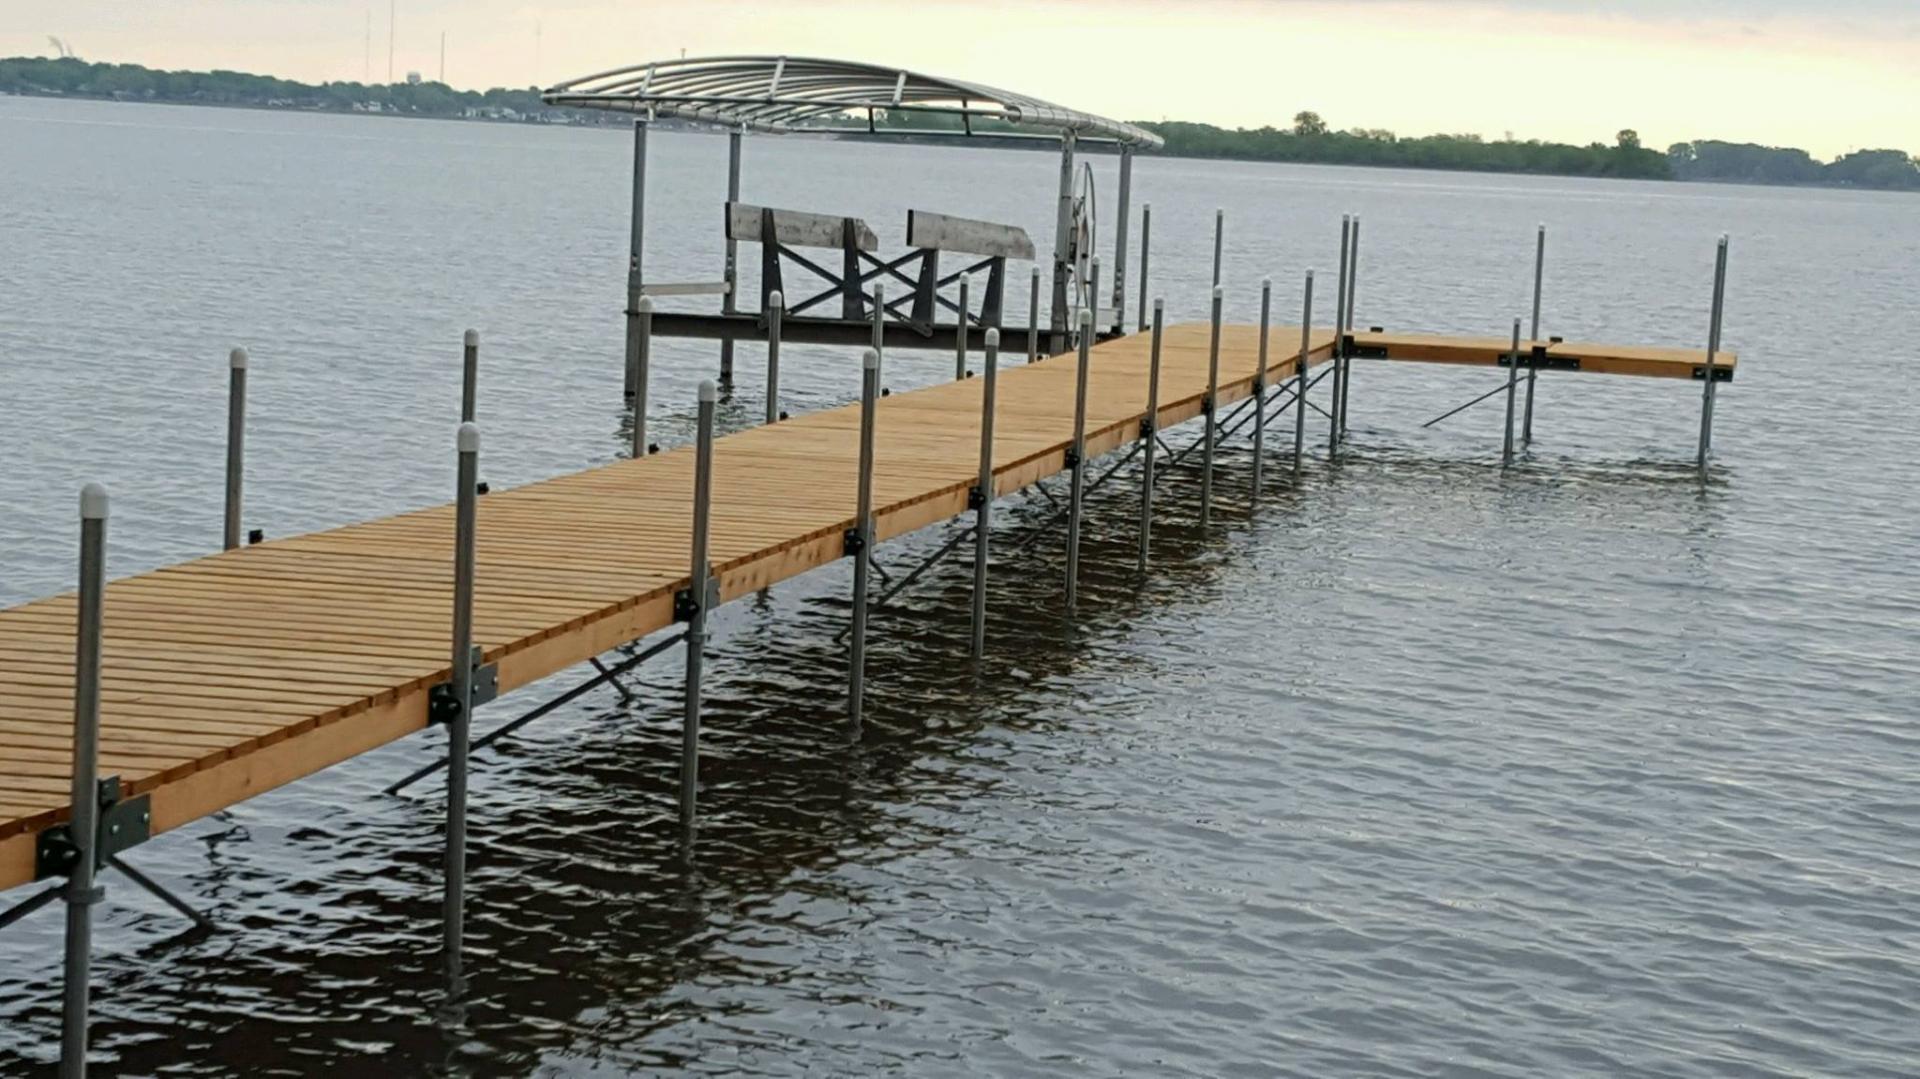 The Original Wood Sectional Docks